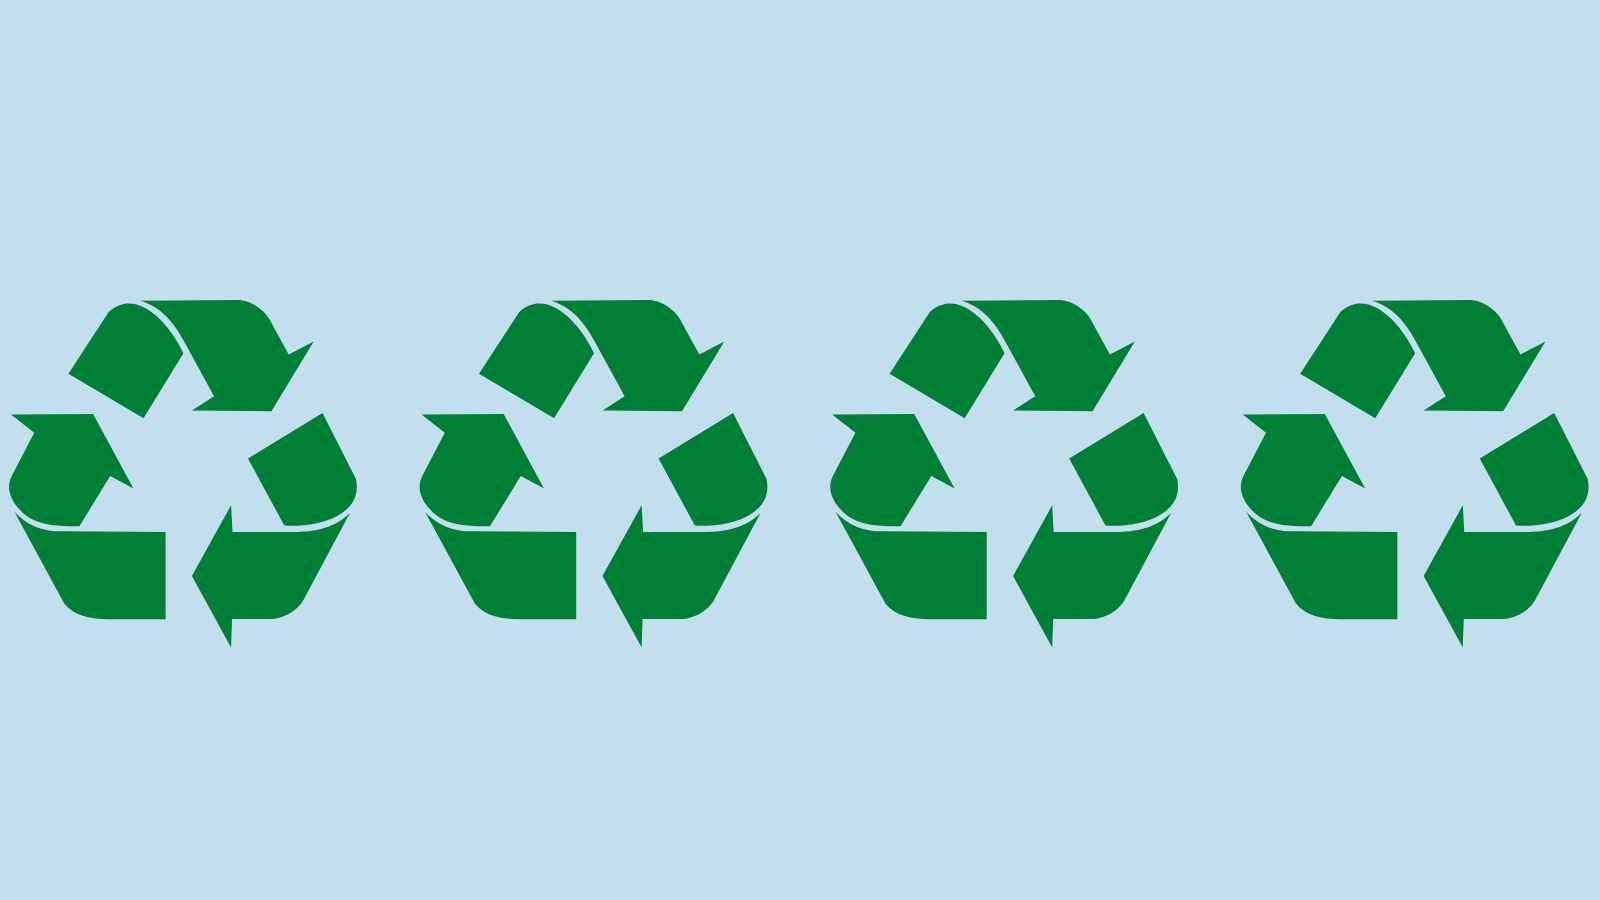 A row of recycling symbols 